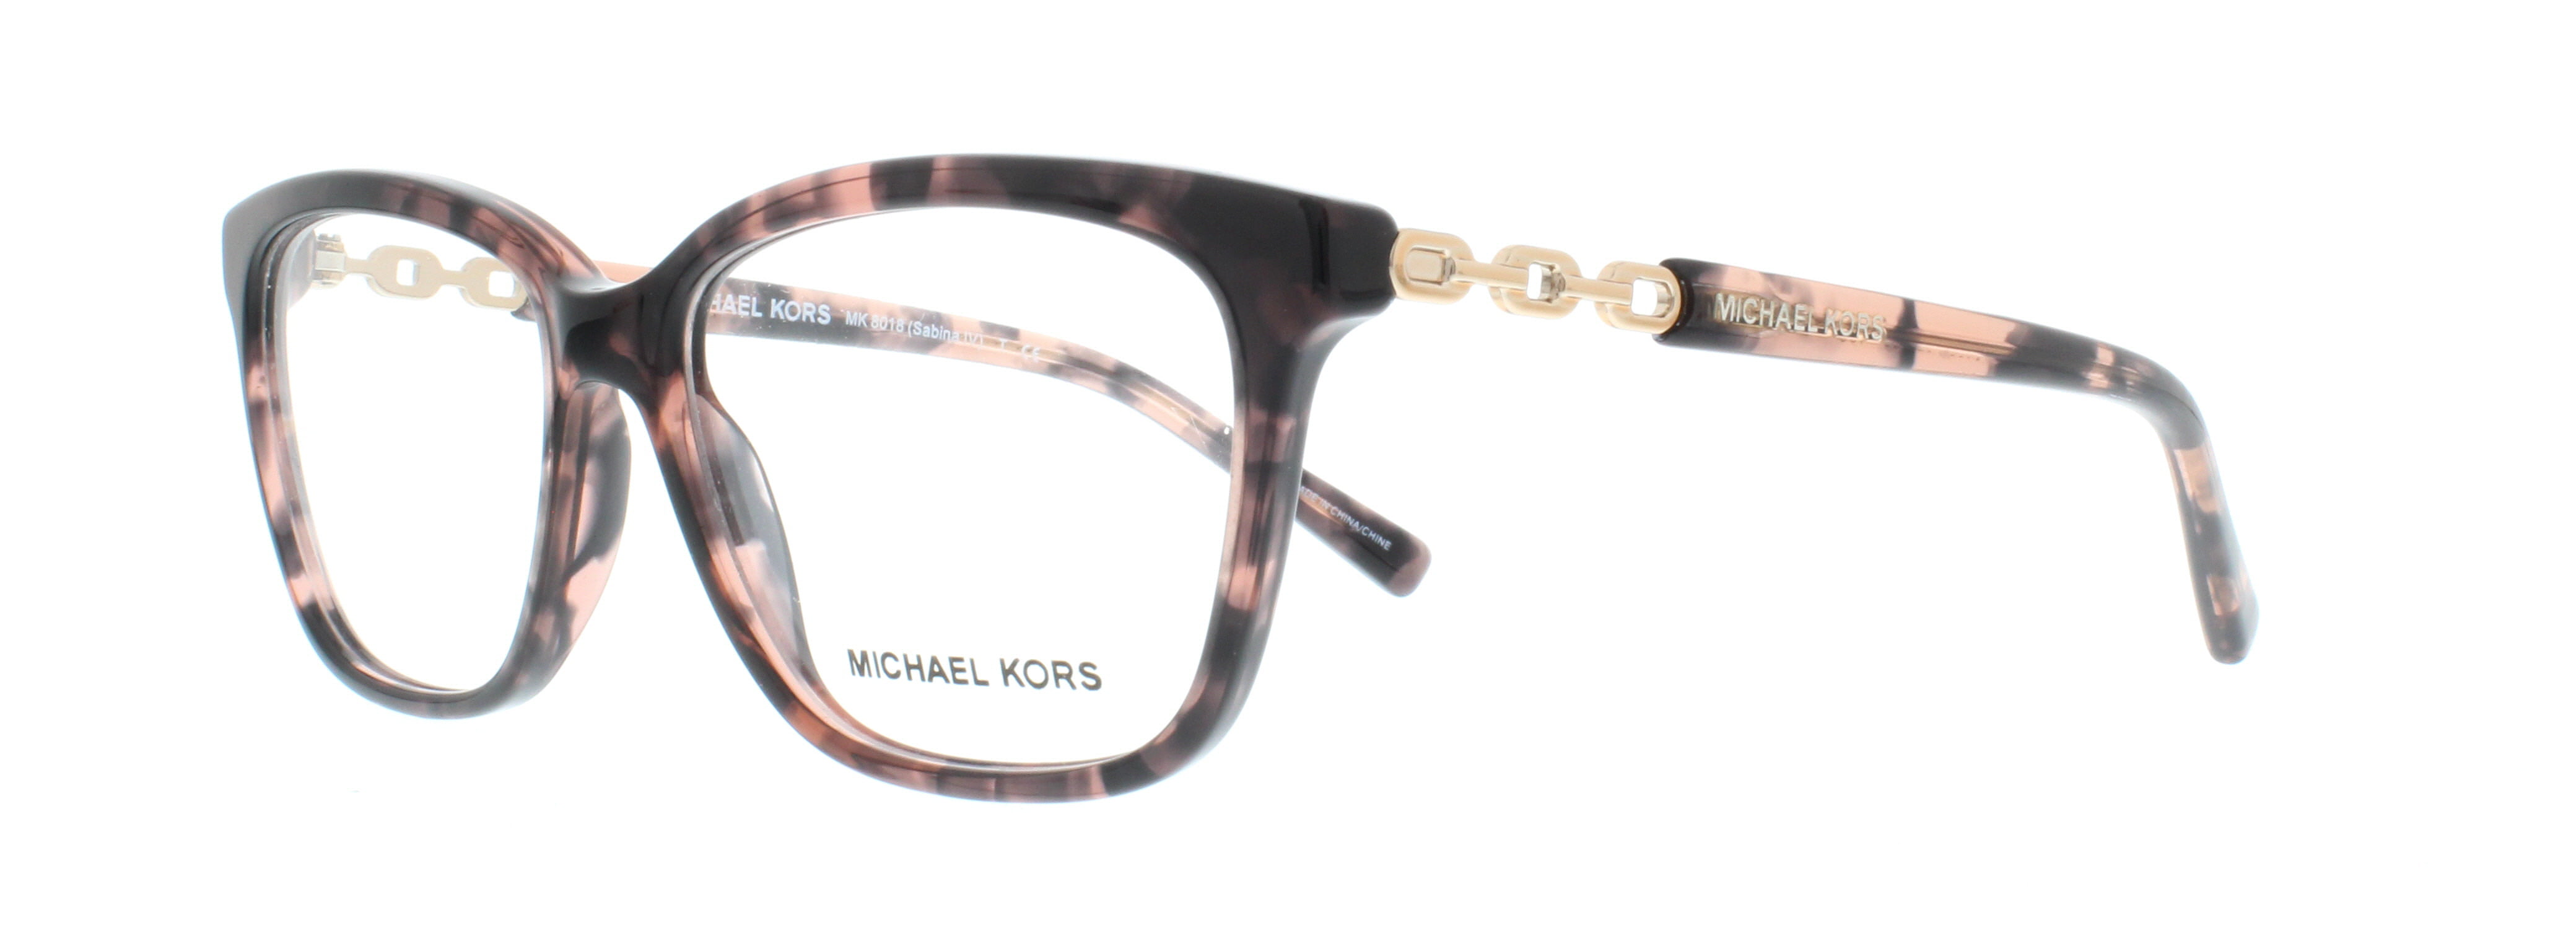 MICHAEL KORS Eyeglasses MK 8018 3108 Pink Tortoise/Rose Gold 52MM ...